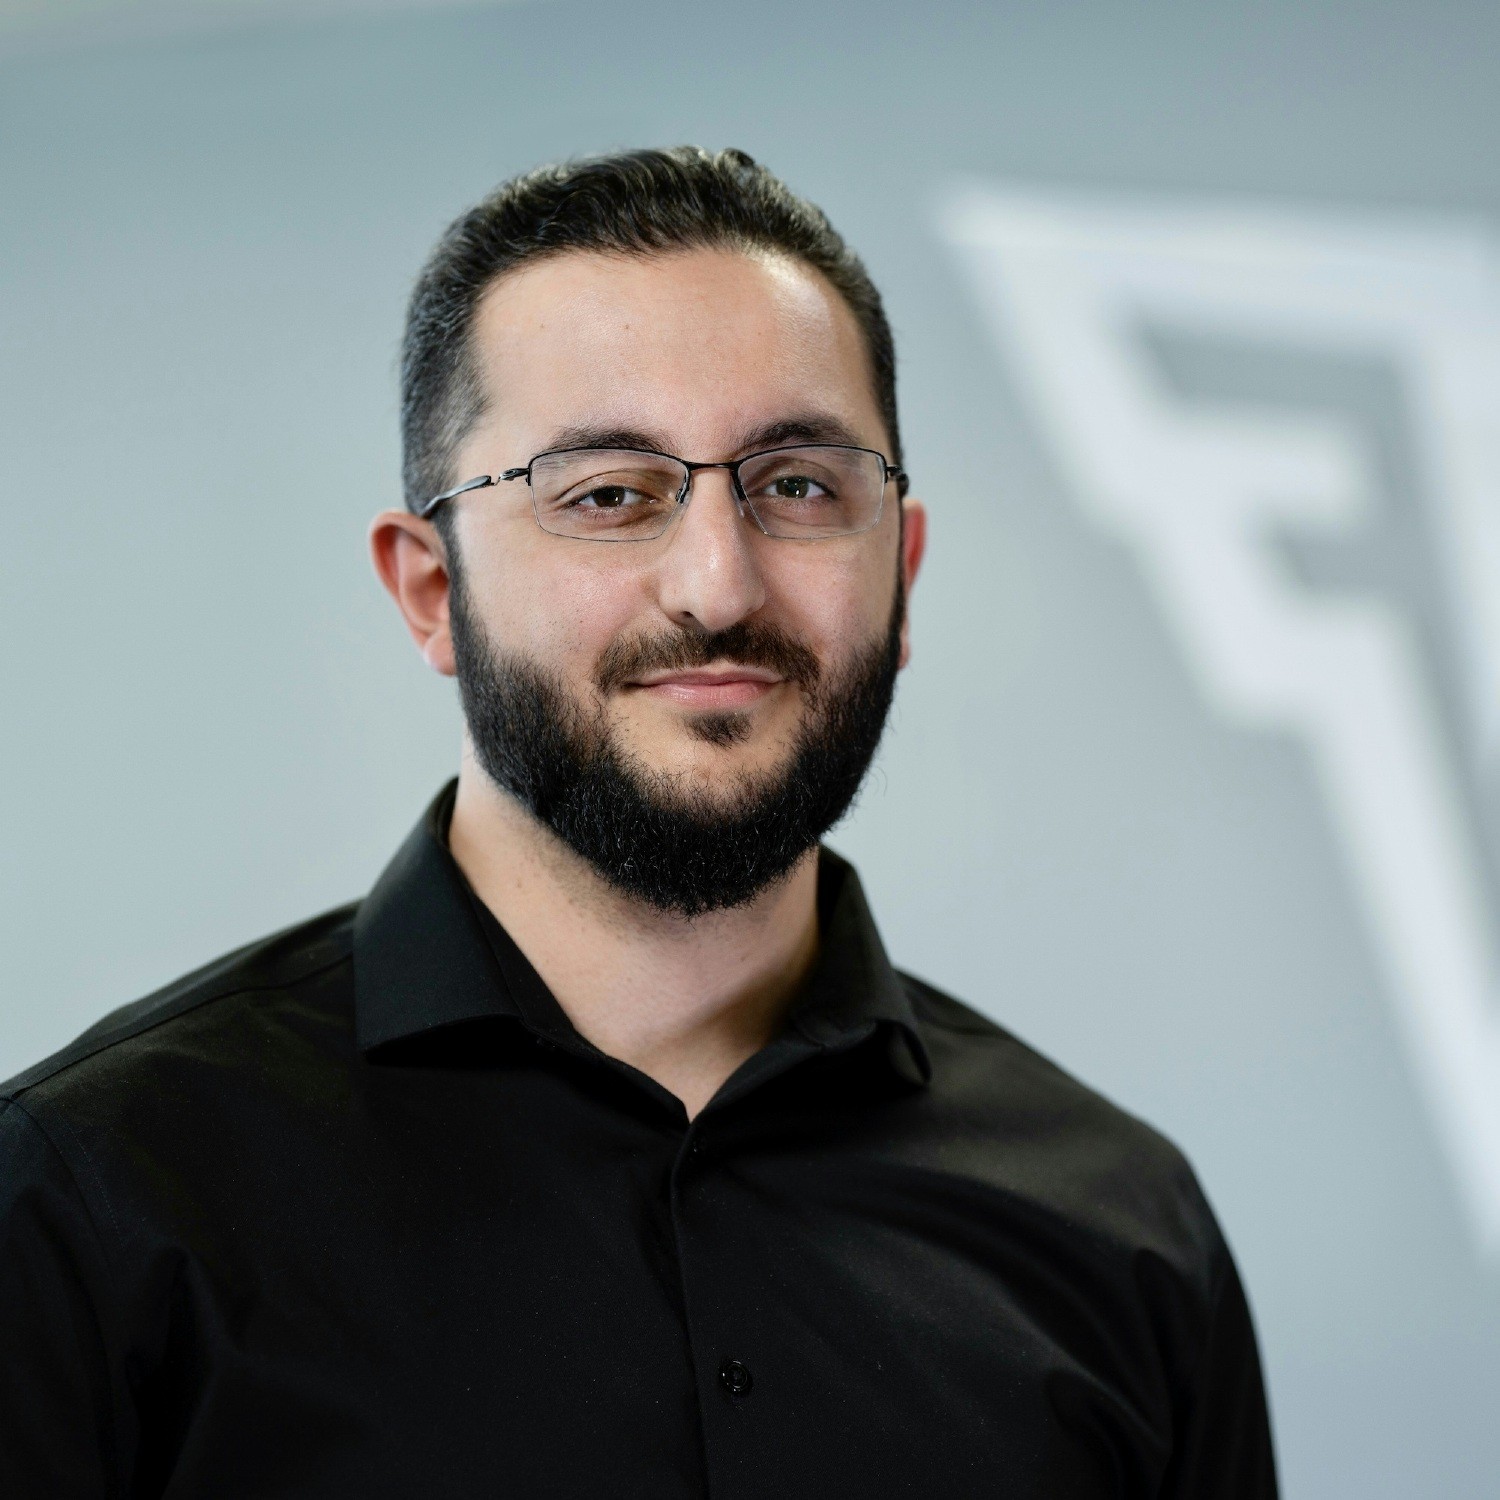 CodeSignal's CEO and Co-founder Tigran Sloyan.